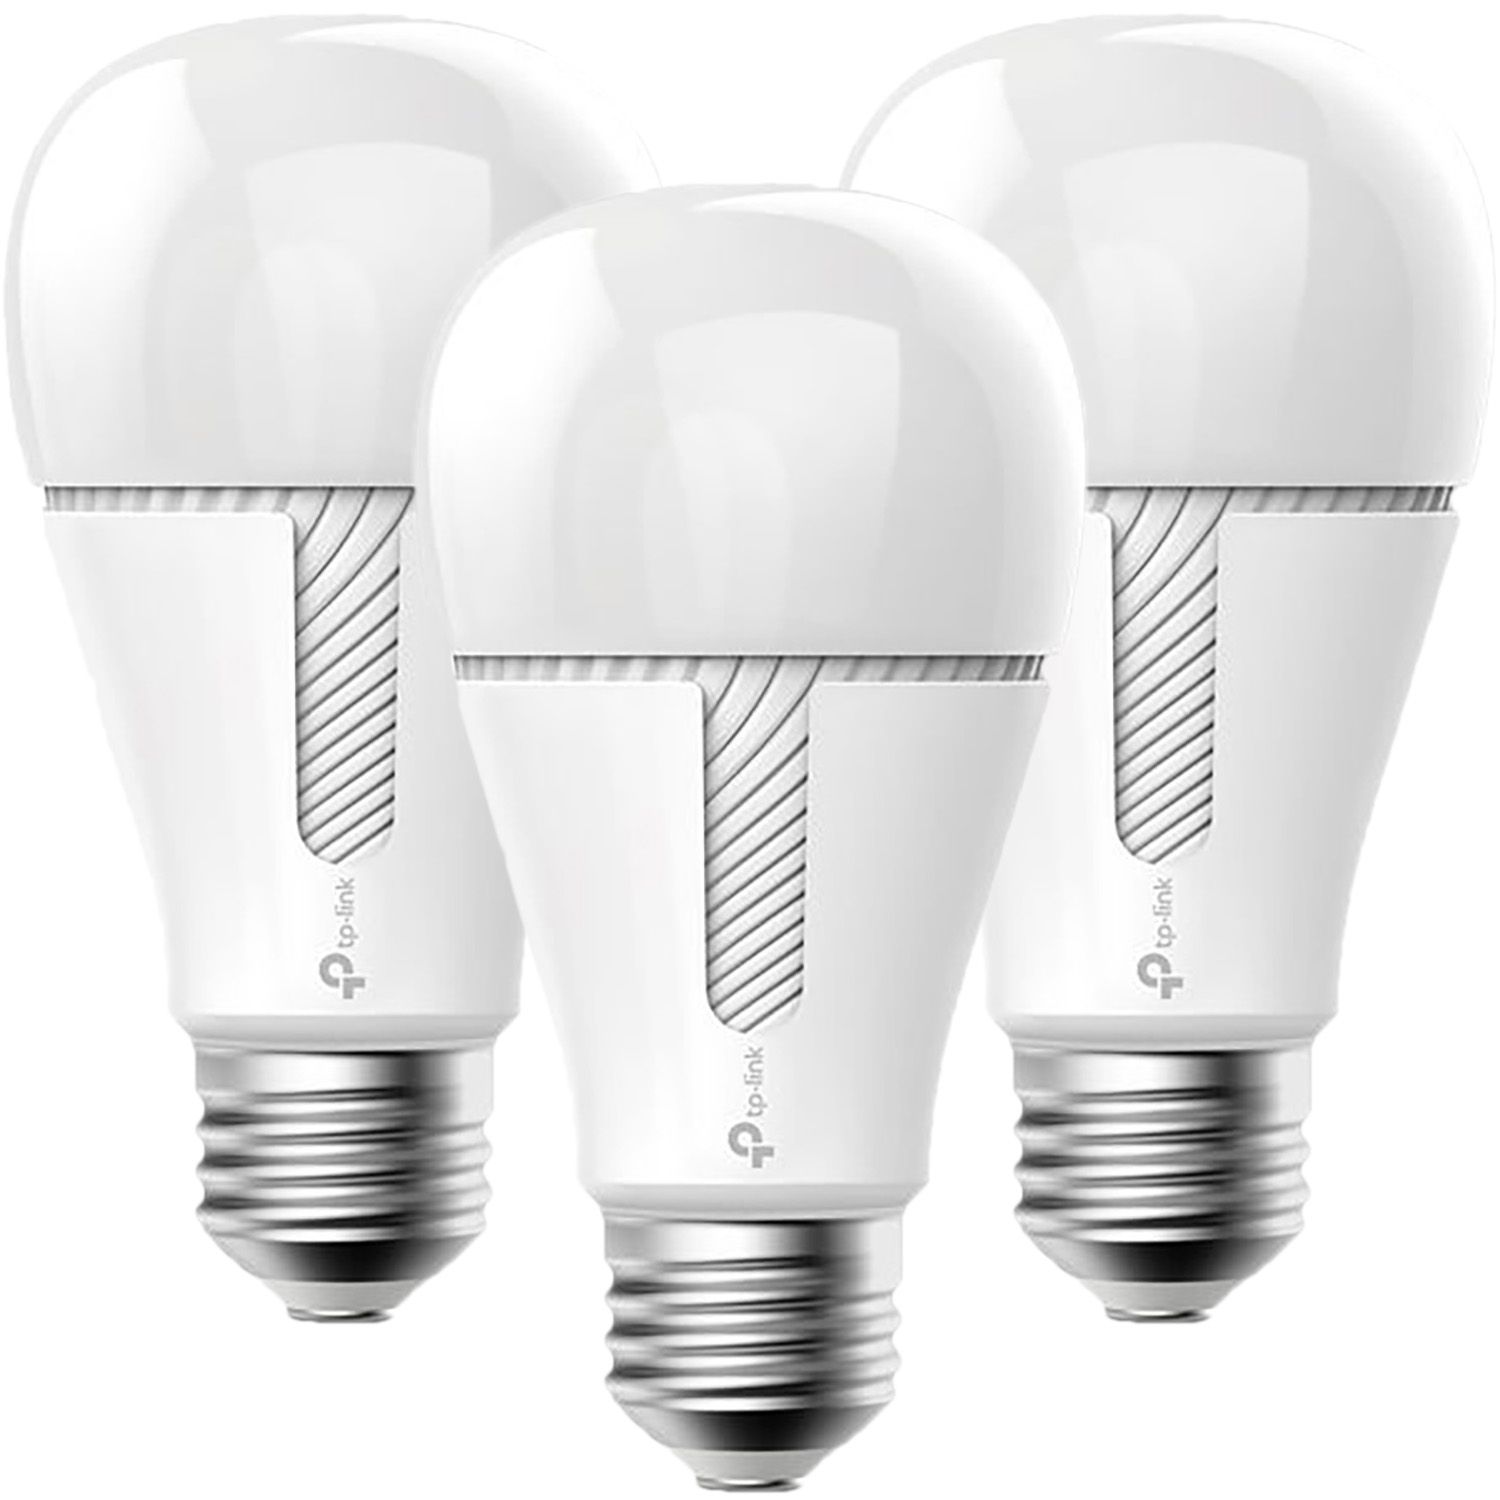 TP-LINK Kasa Smart Wi-Fi White LED Dimmable Light Bulb – 3 Pack